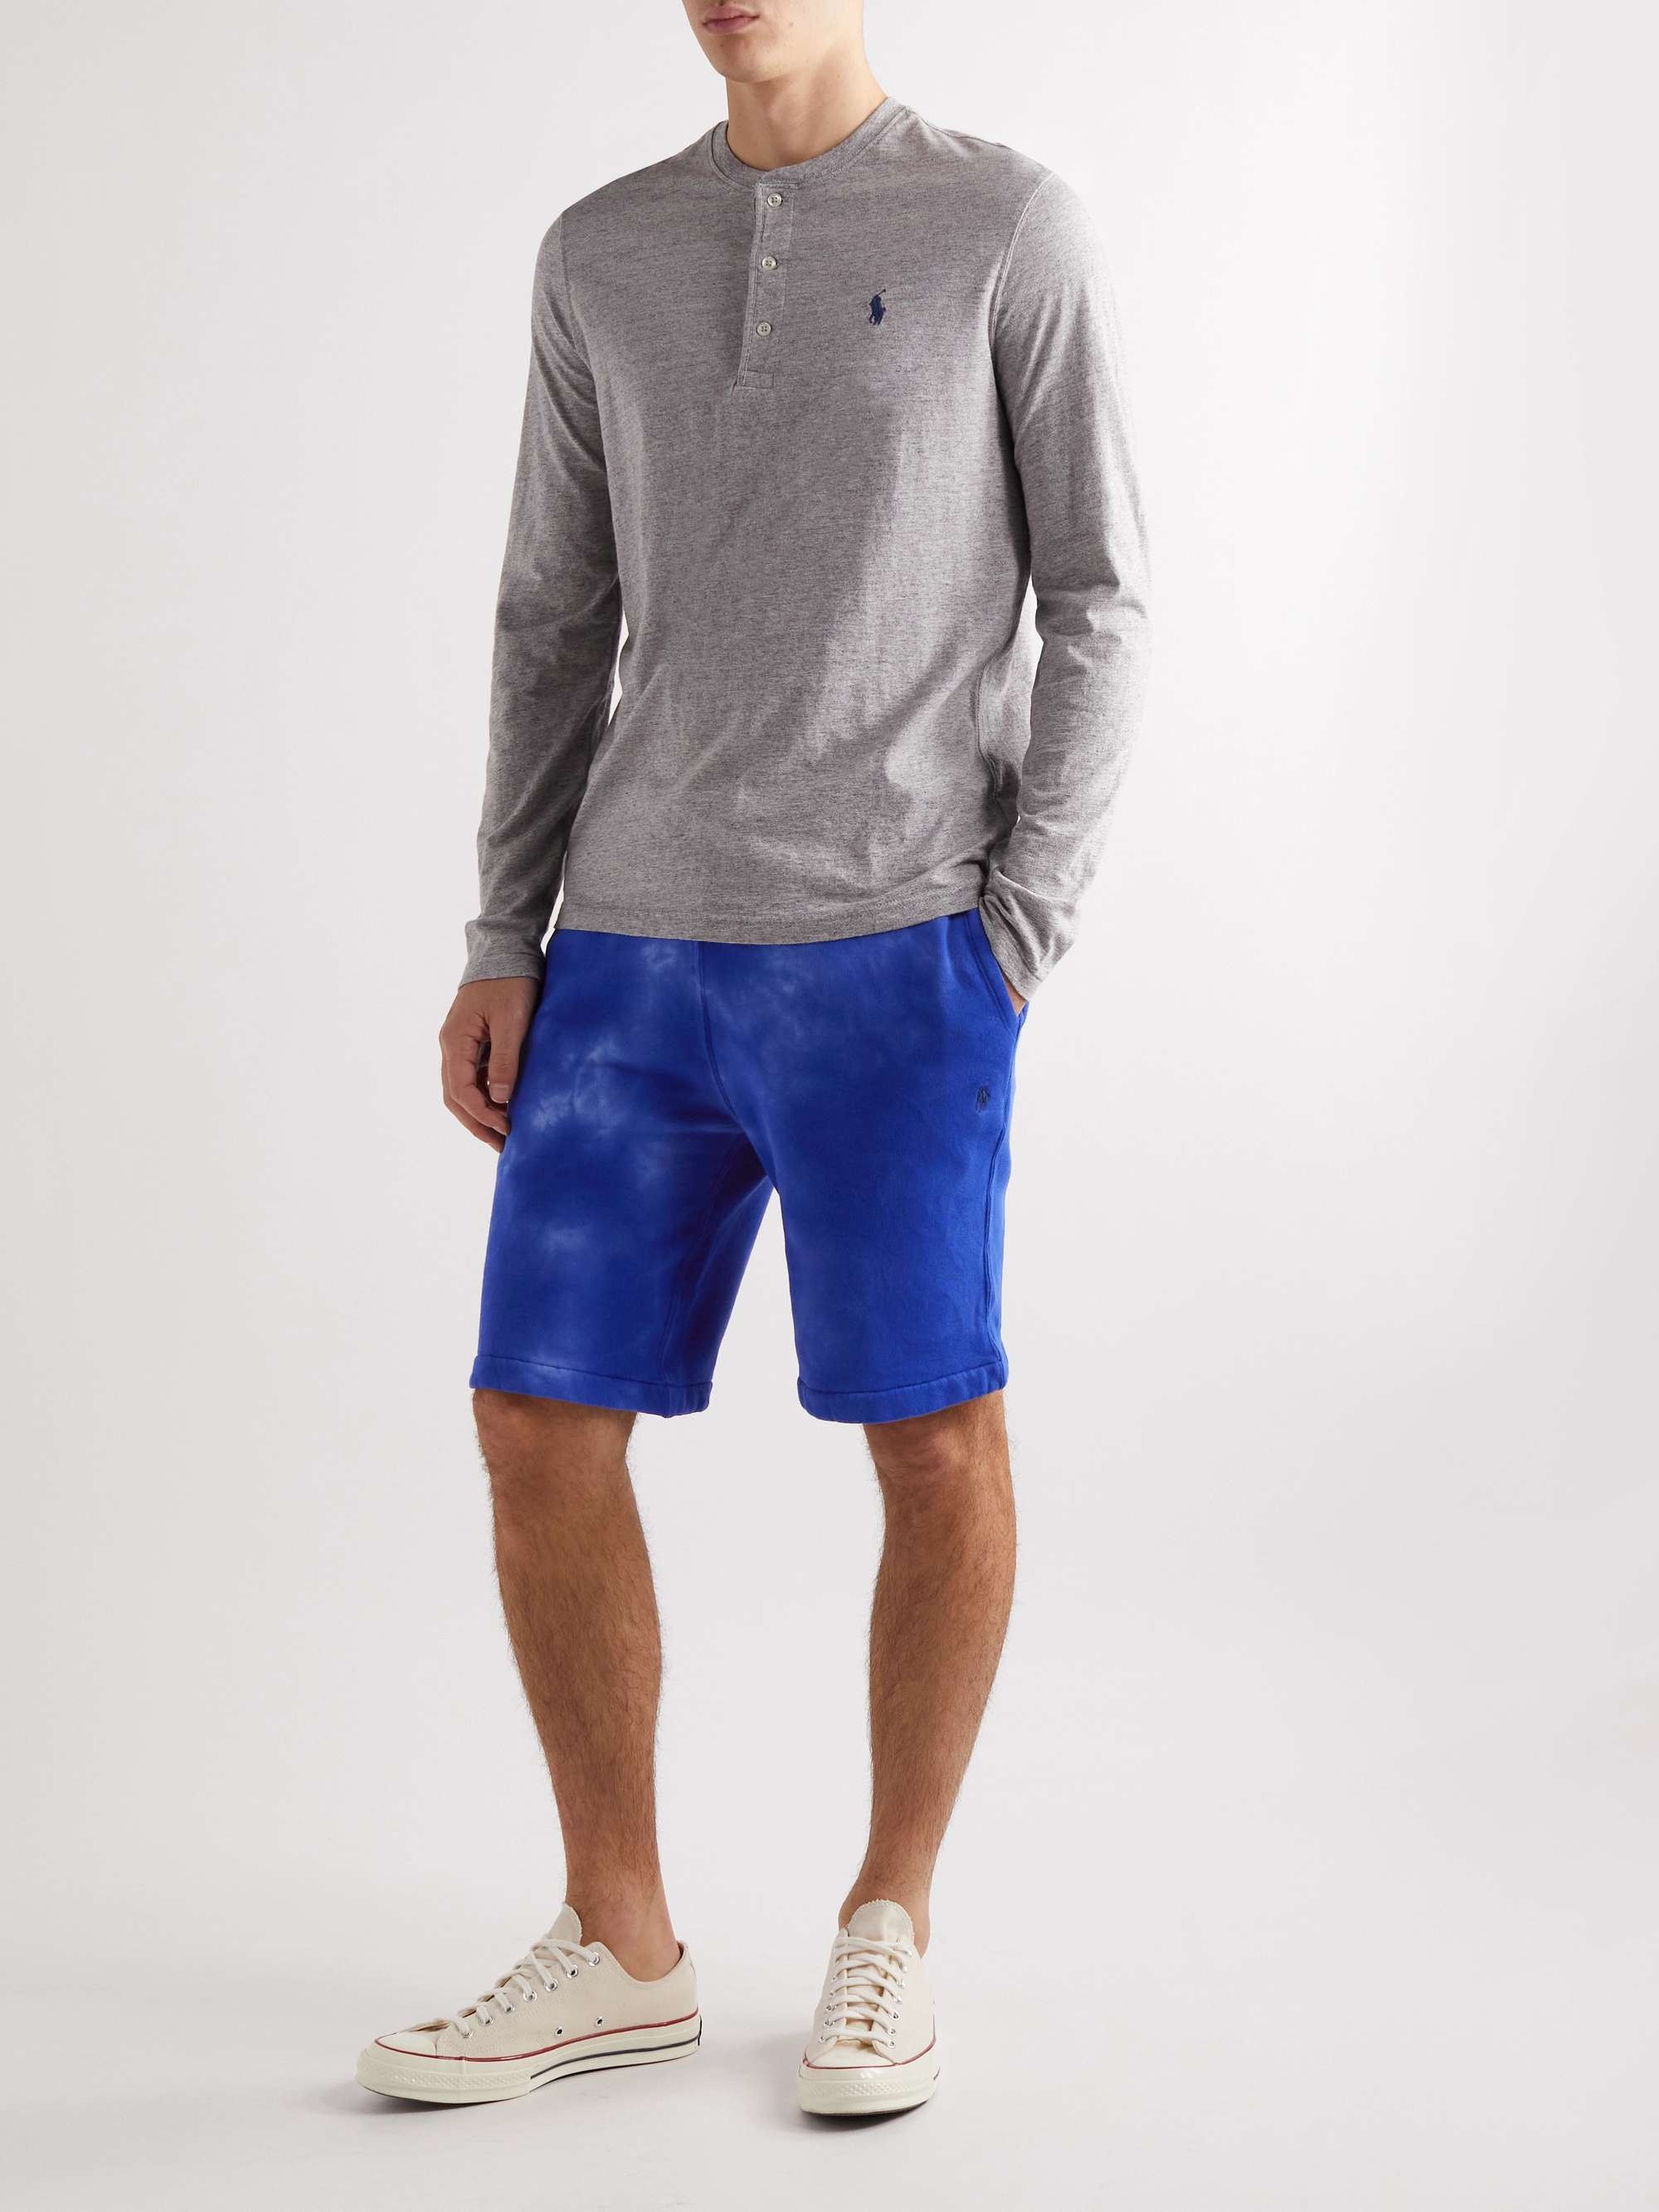 Blue Printed Cotton-Blend Jersey Shorts | POLO RALPH LAUREN | MR PORTER